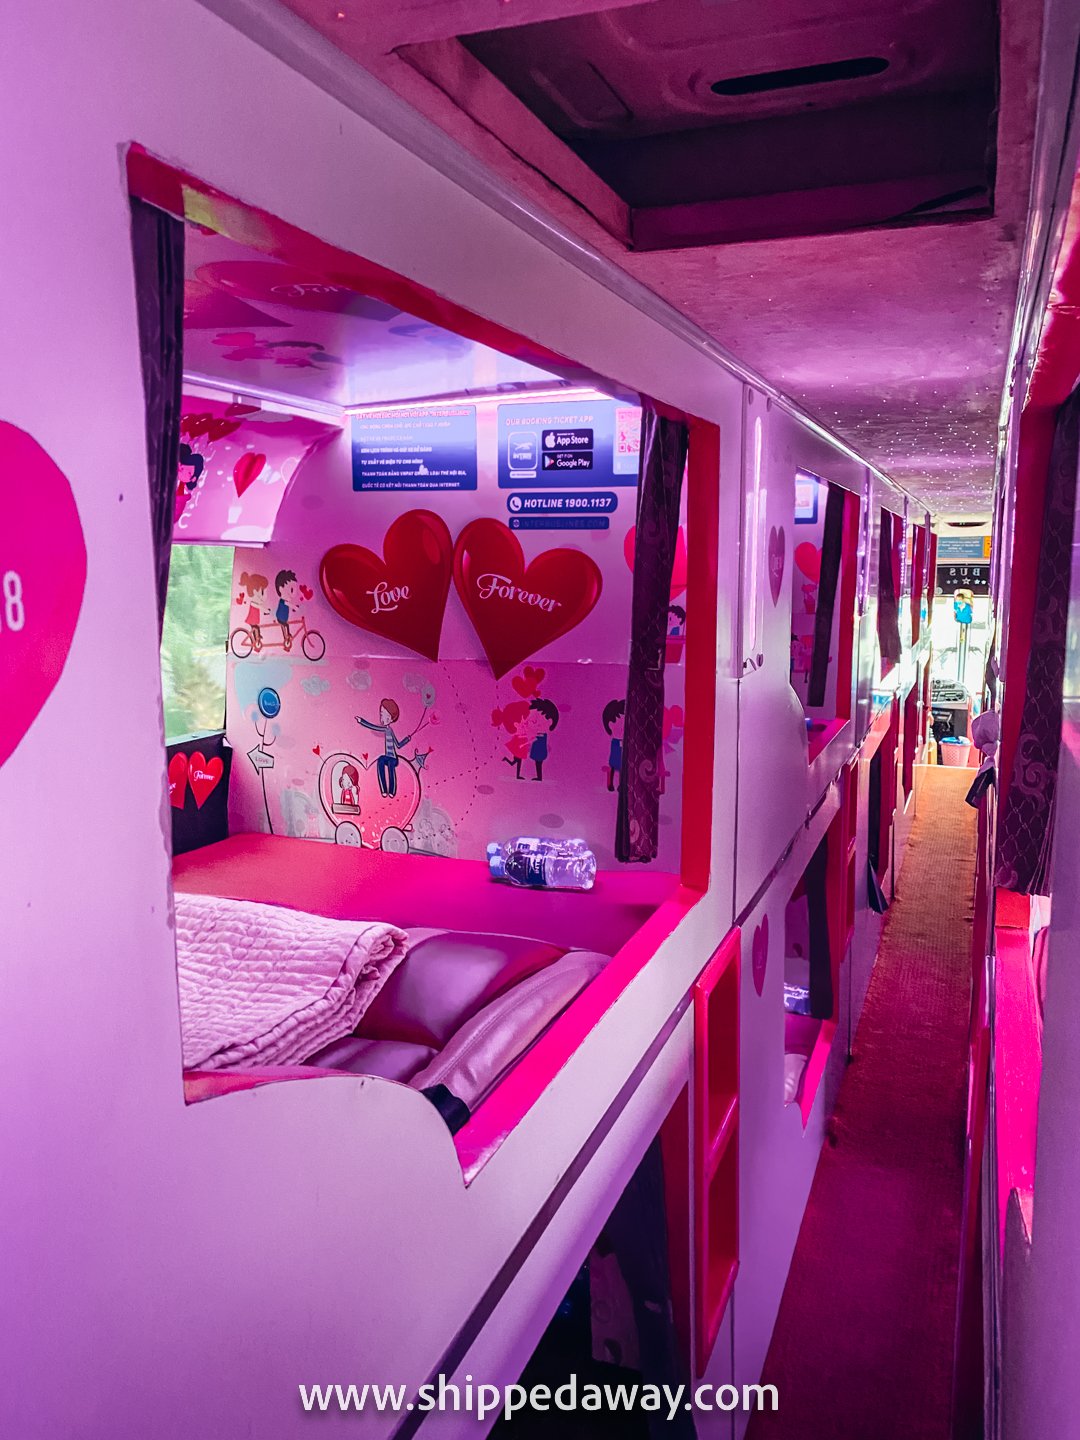 Sa Pa Valentine love-themed bus going from Hanoi, Vietnam